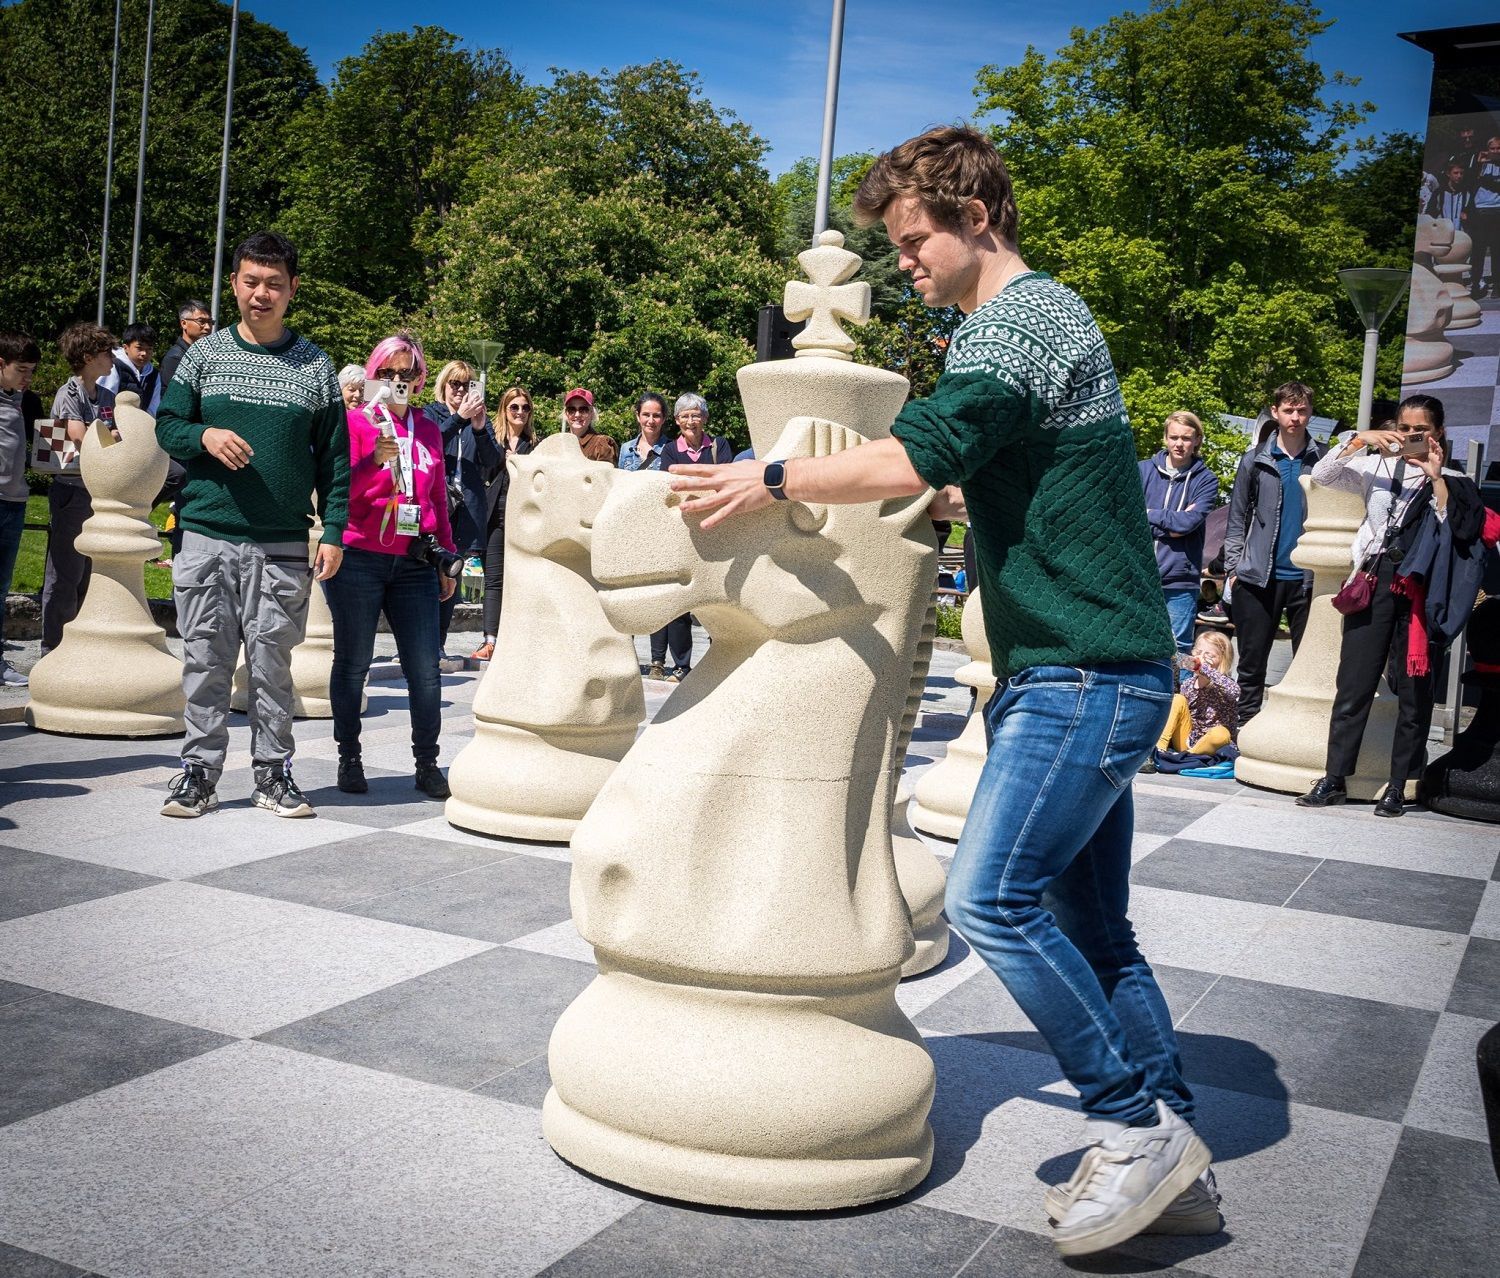 Magnus Carlsen snapped by chess photographer Maria Emelianova, who